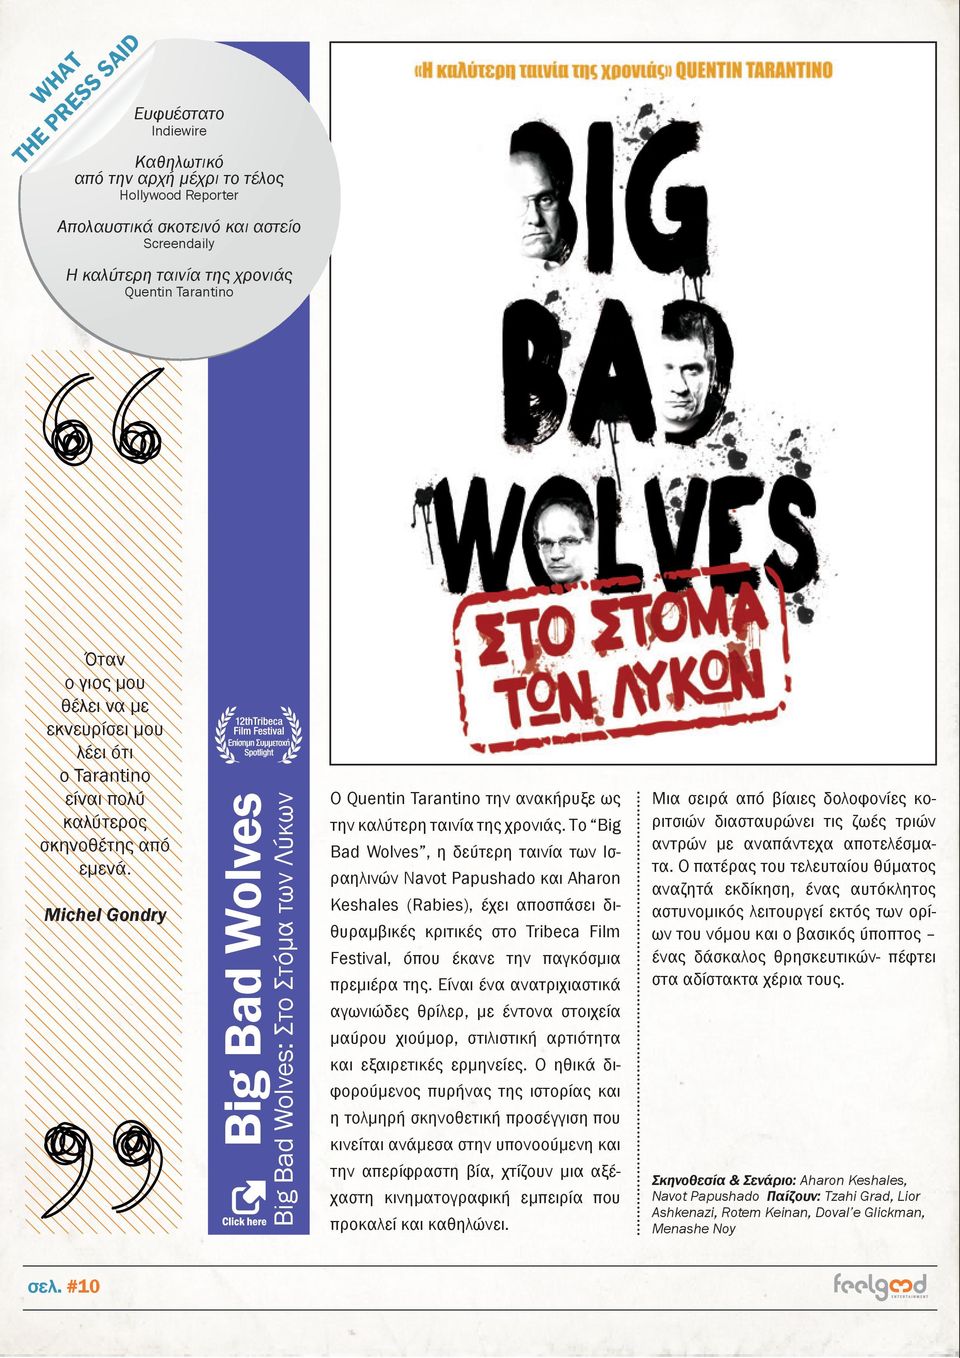 Michel Gondry Big Bad Wolves Big Bad Wolves: Στο Στόμα των Λύκων Ο Quentin Tarantino την ανακήρυξε ως την καλύτερη ταινία της χρονιάς.